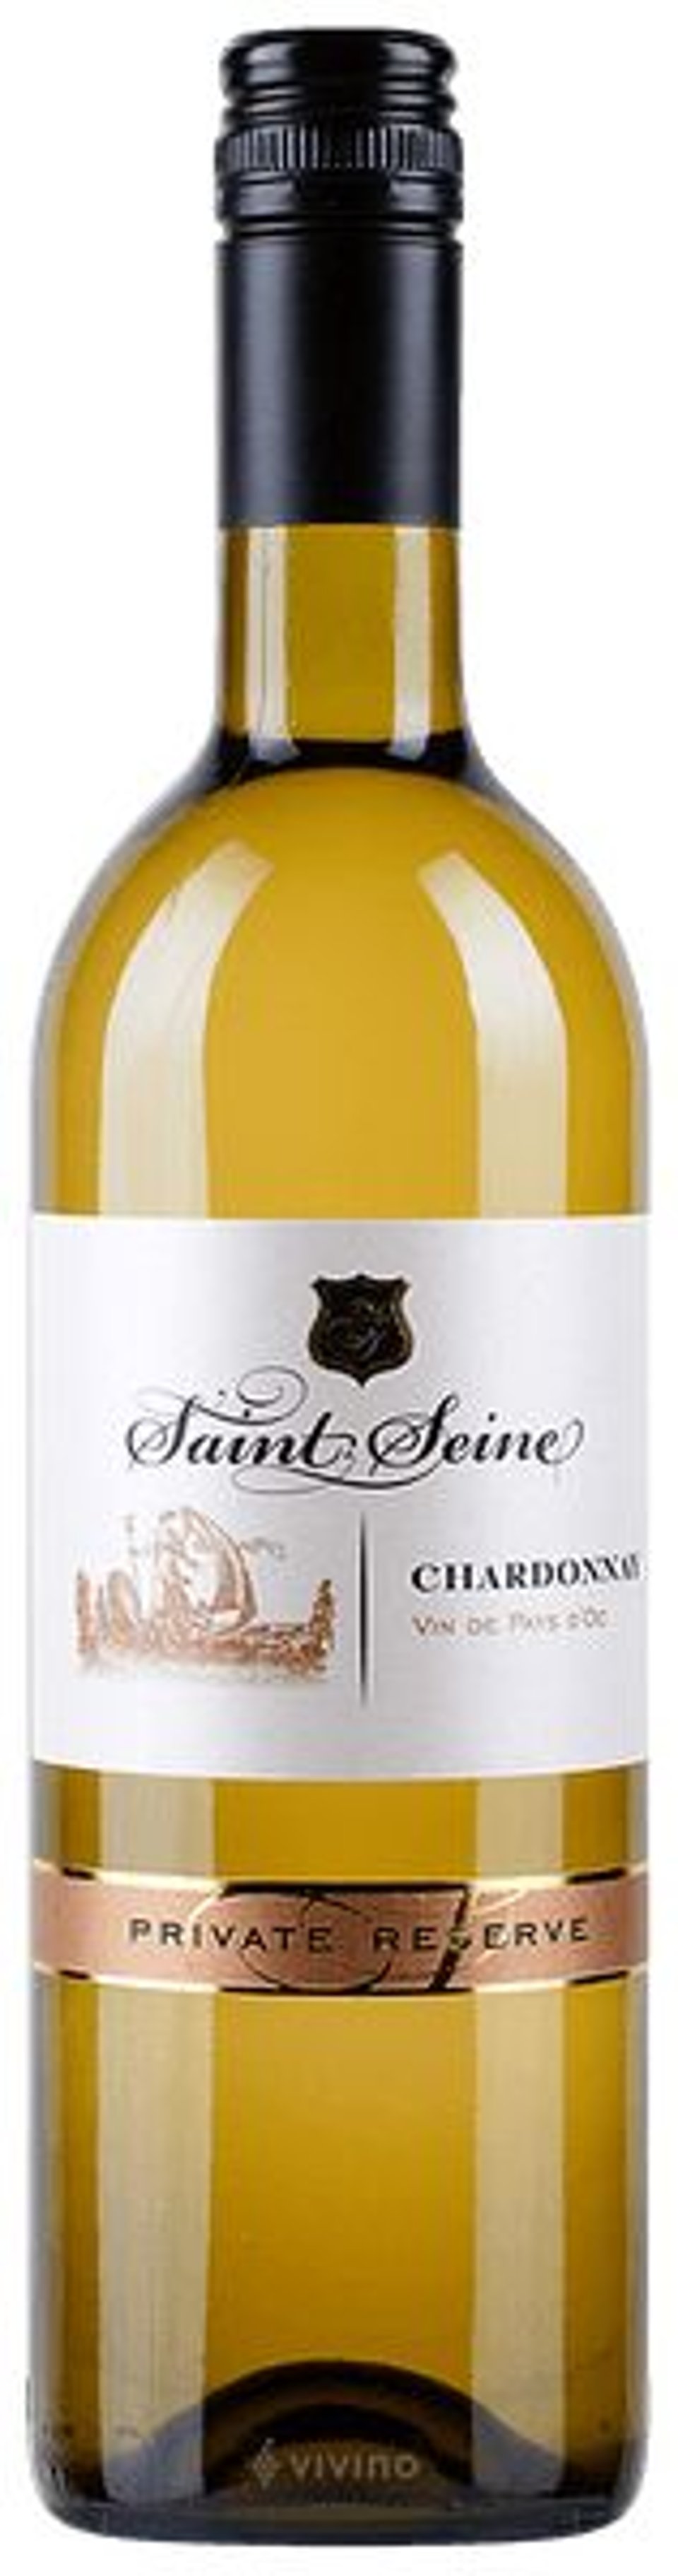 Chardonnay Vdp d'Oc 'Saint Seine' 2019